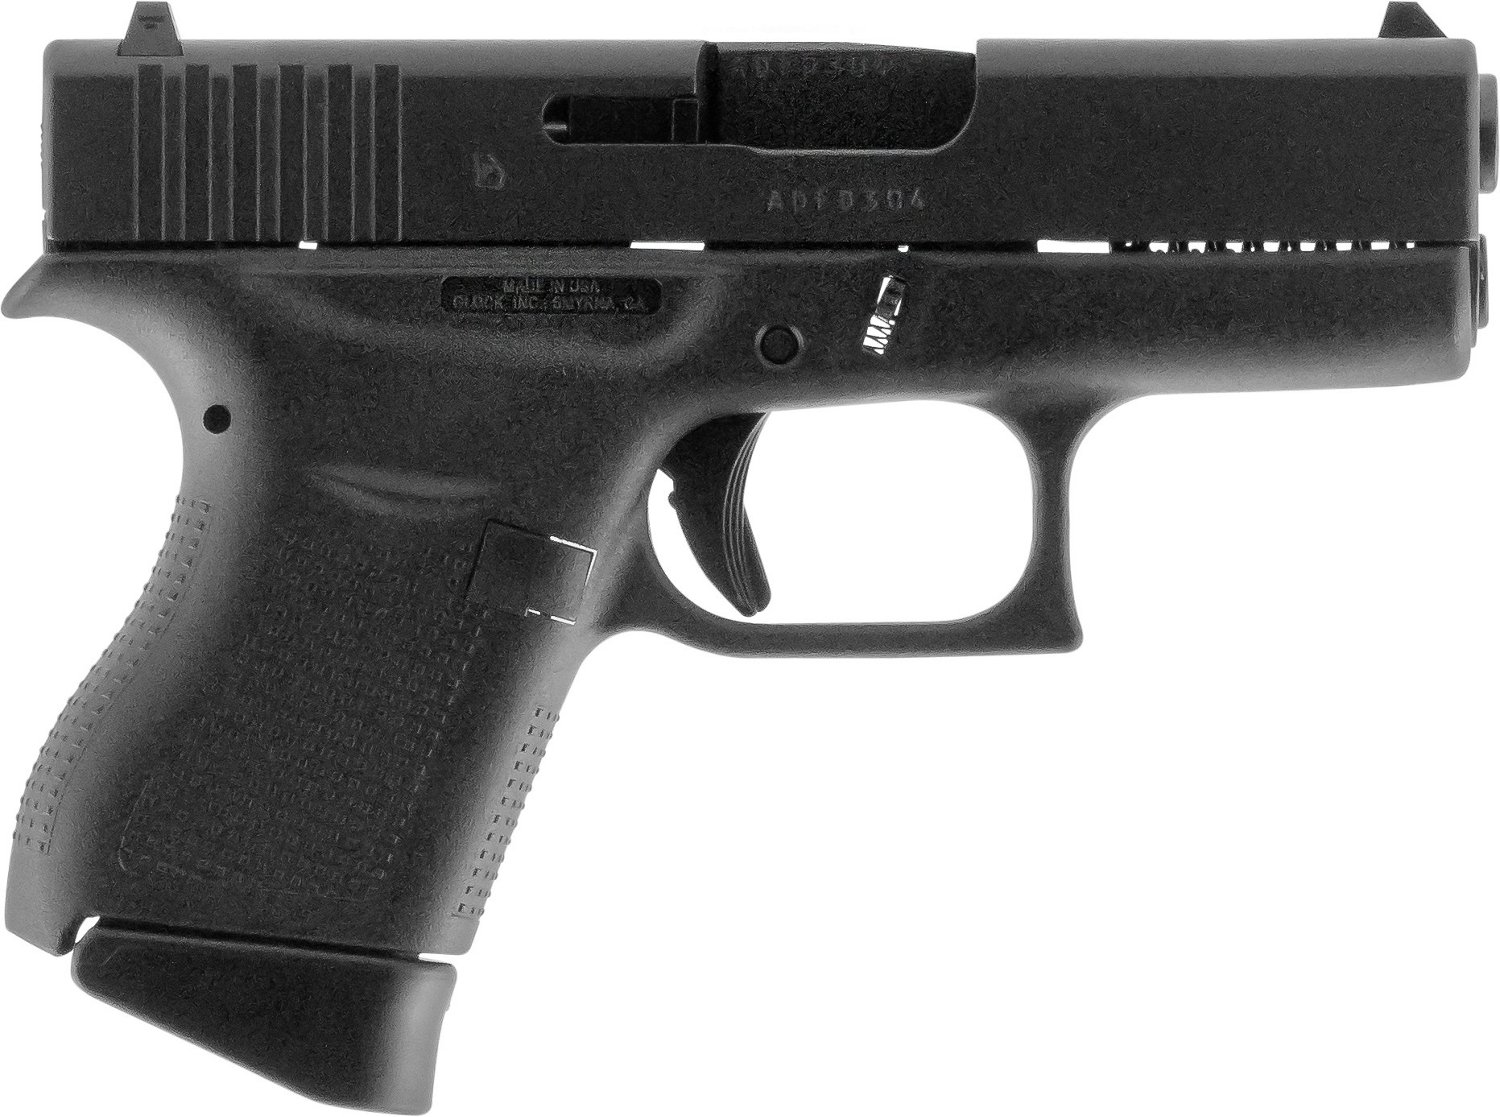 GLOCK G43 9mm Semiautomatic Pistol | Academy